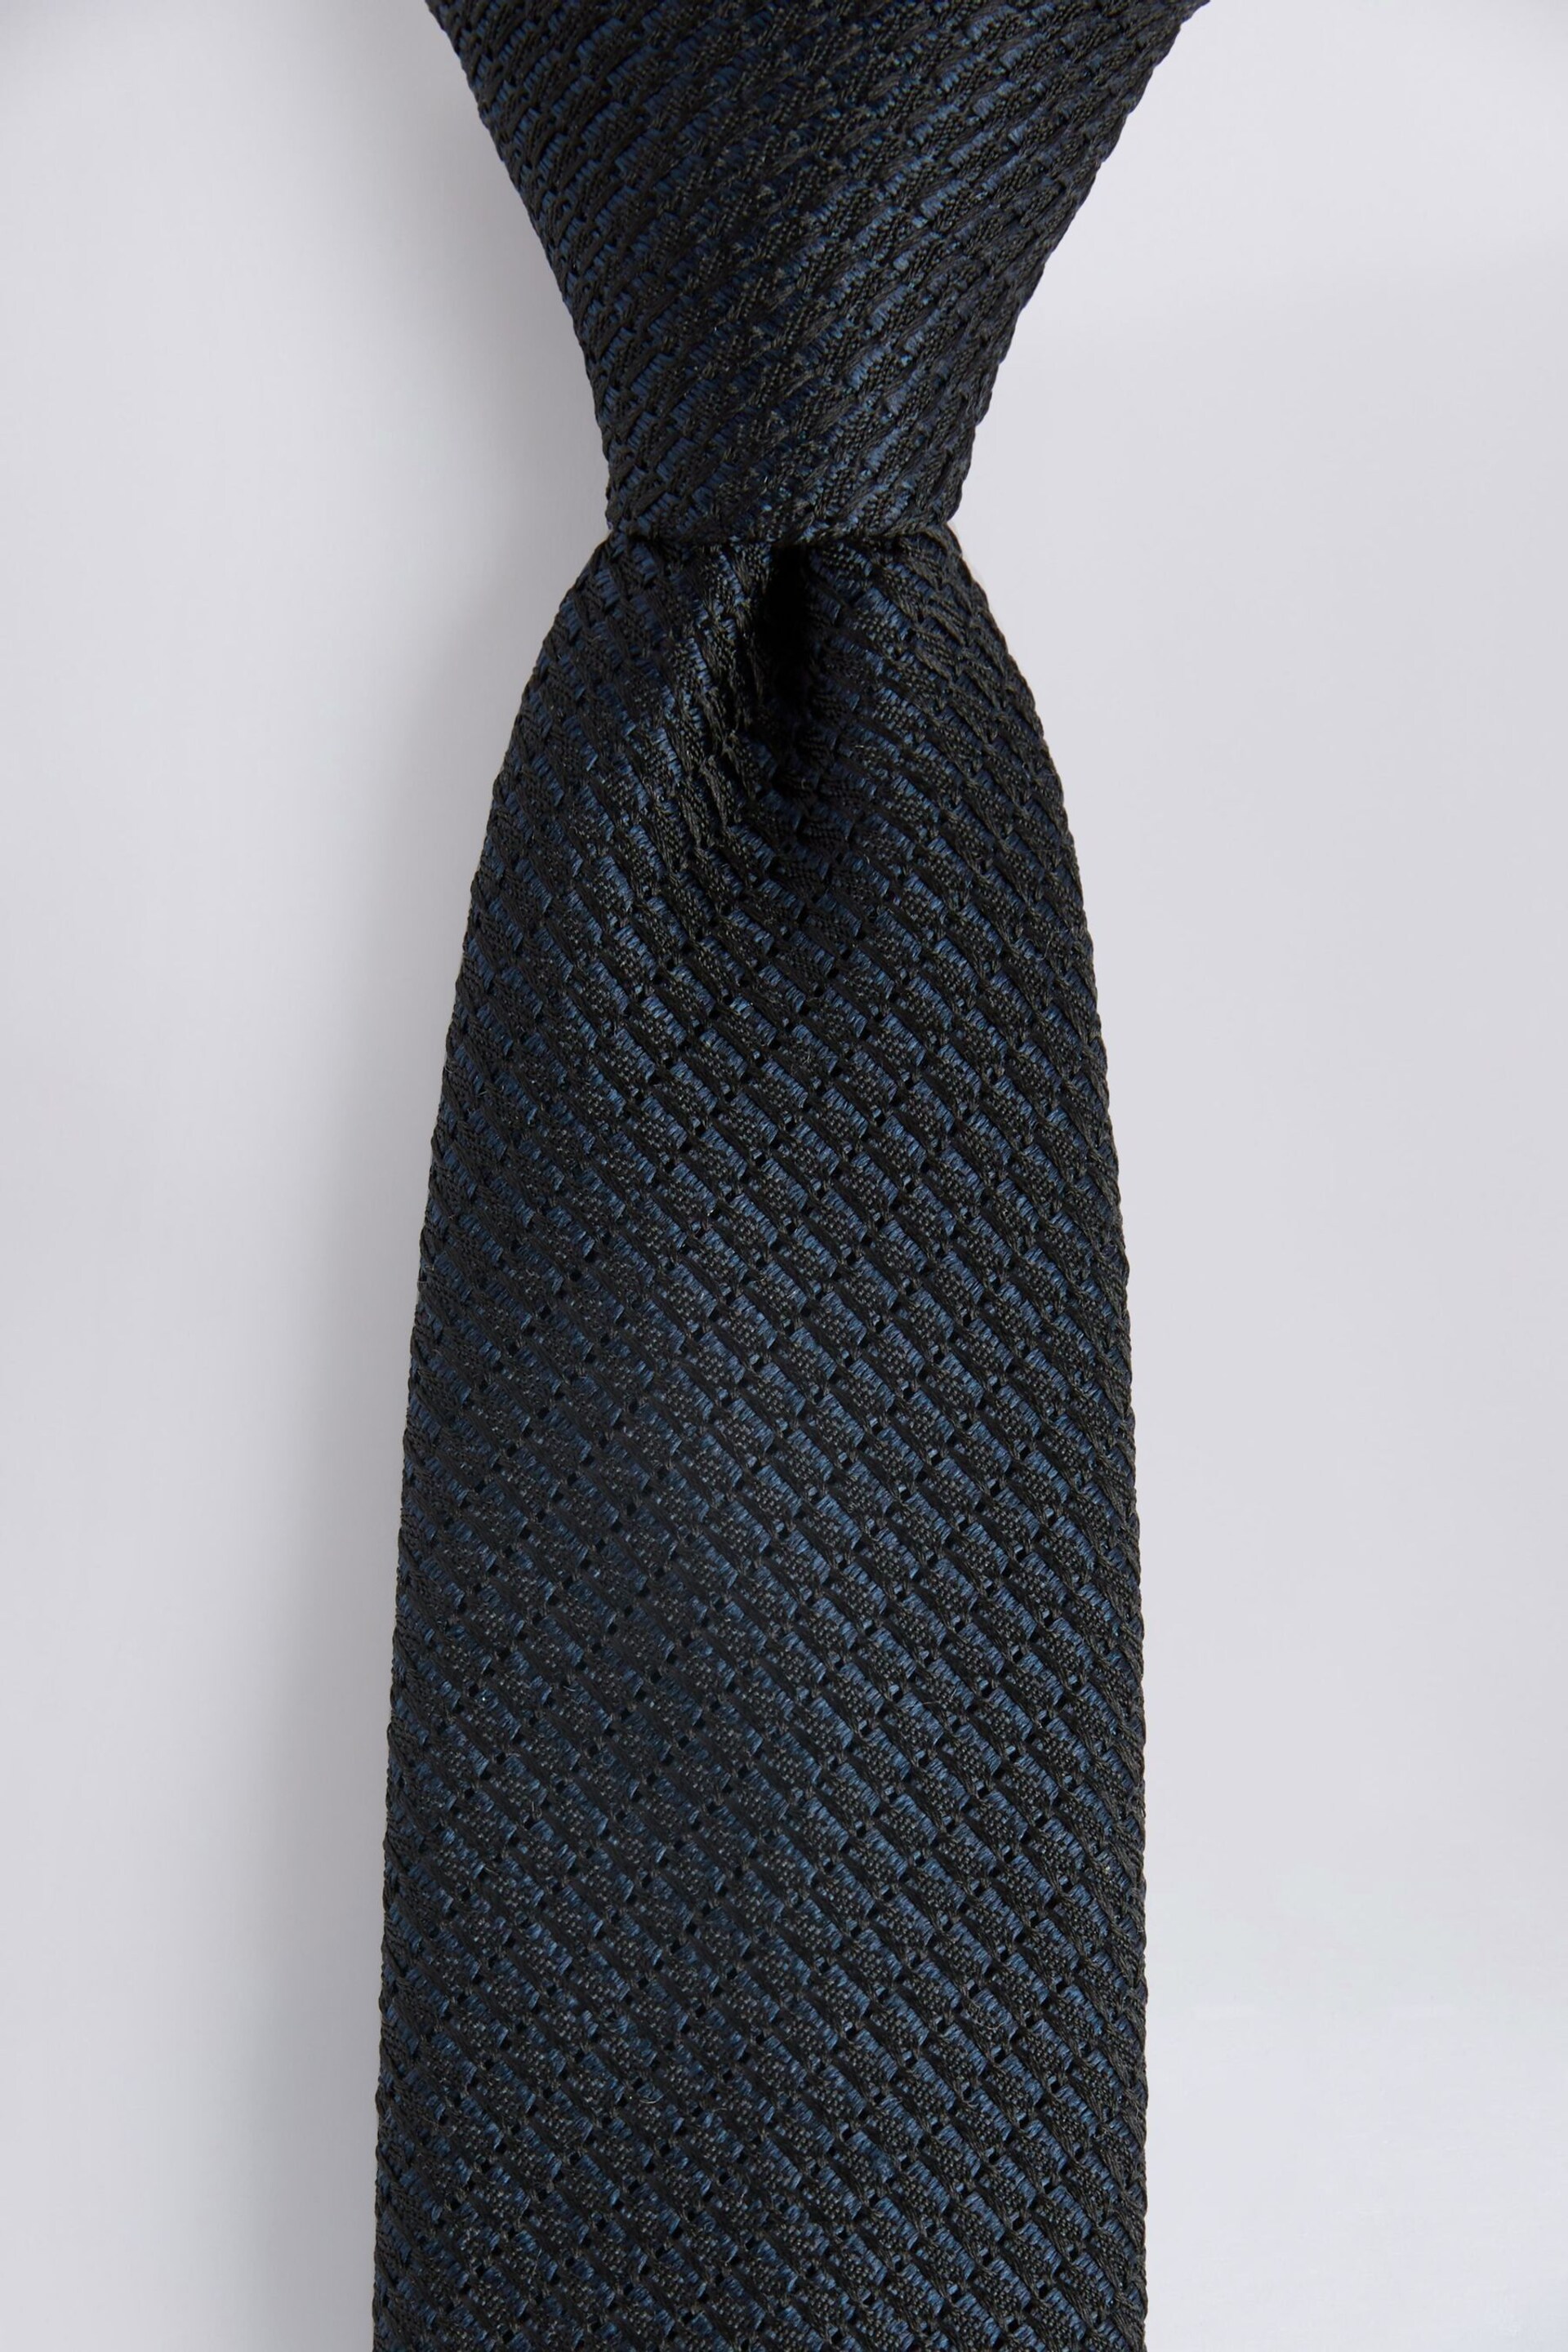 MOSS Dark Blue Grenadine Silk Tie - Image 2 of 2